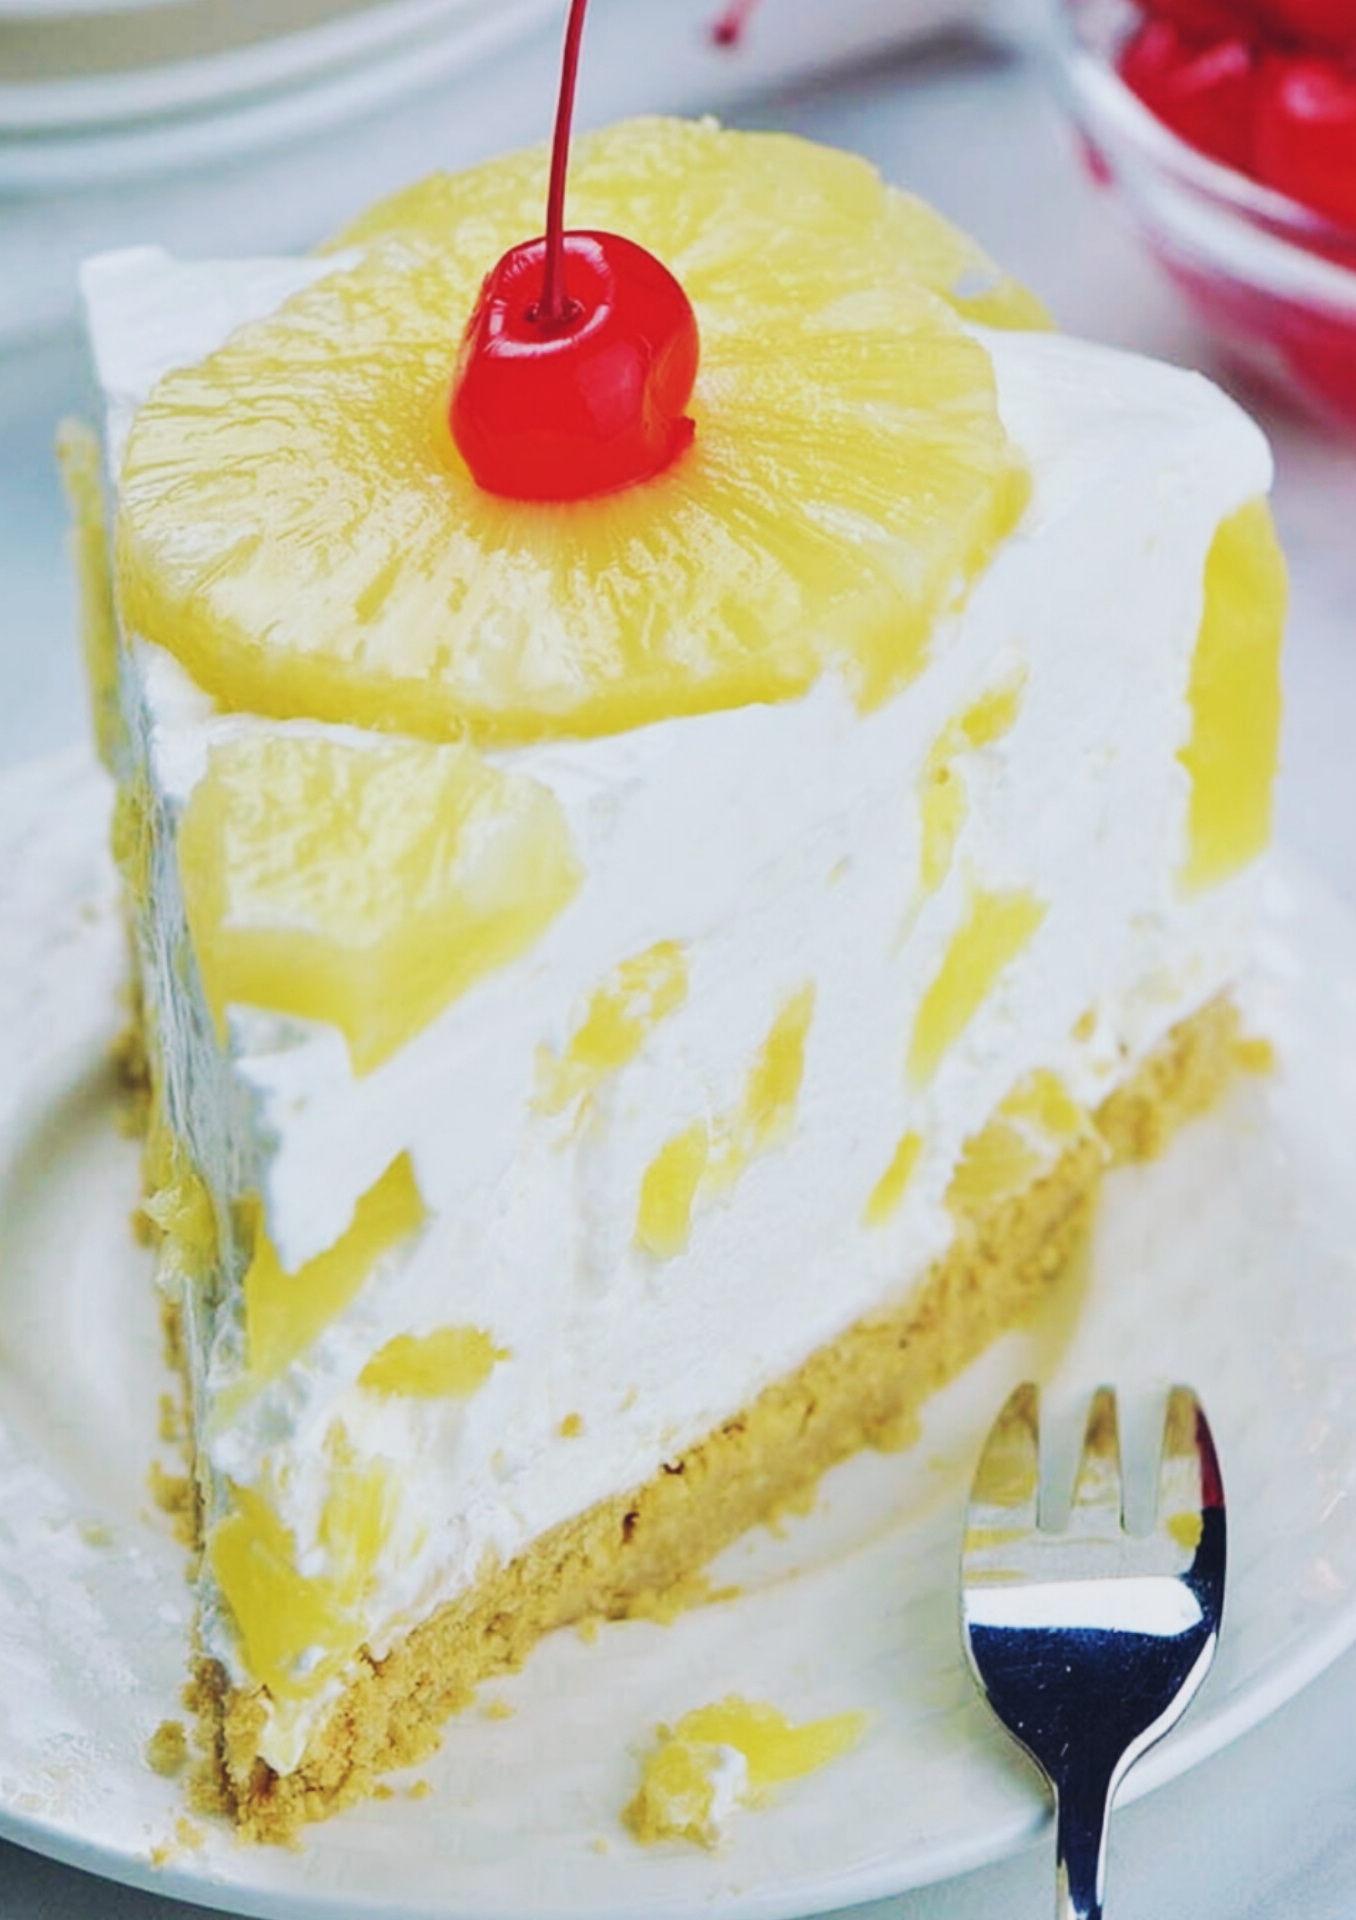 No-Bake Pineapple Cream Dessert Recipe: A Refreshing Summer Treat